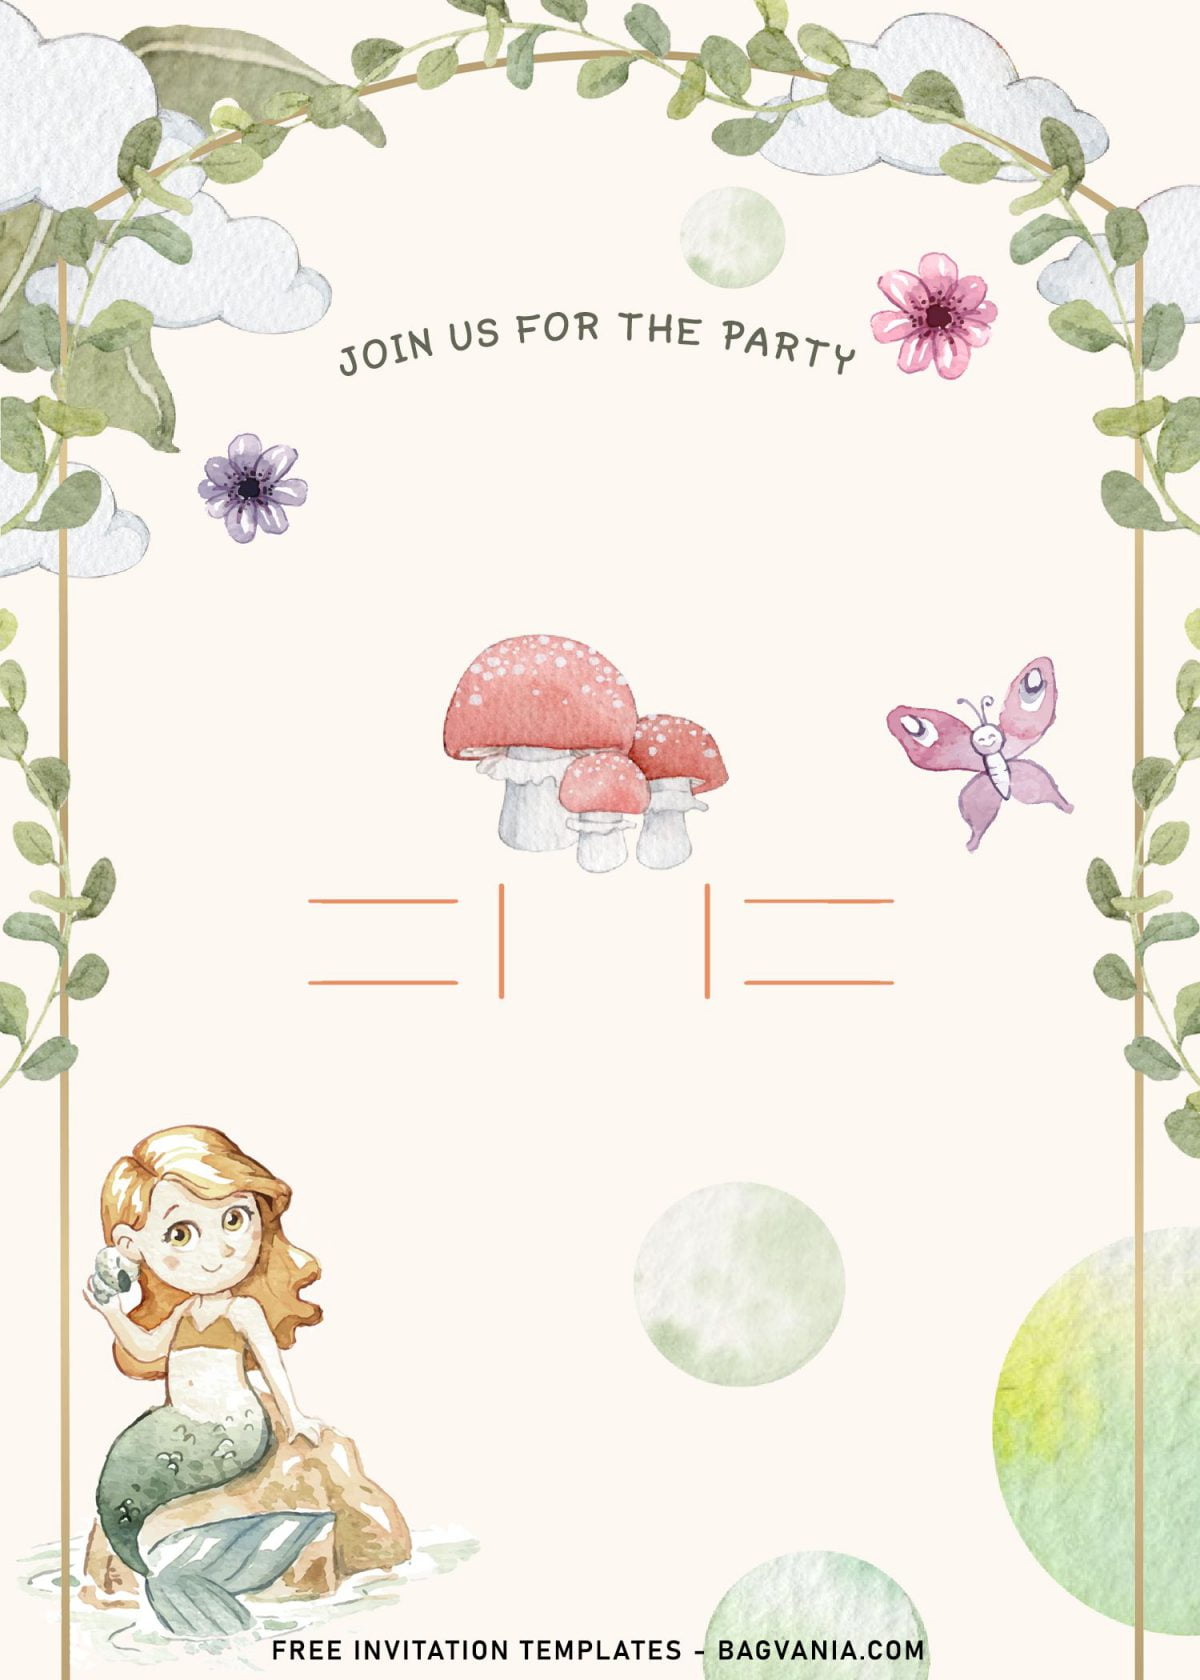 7+ Fairy Tale Birthday Invitation Templates and has cute watercolor mushrooms